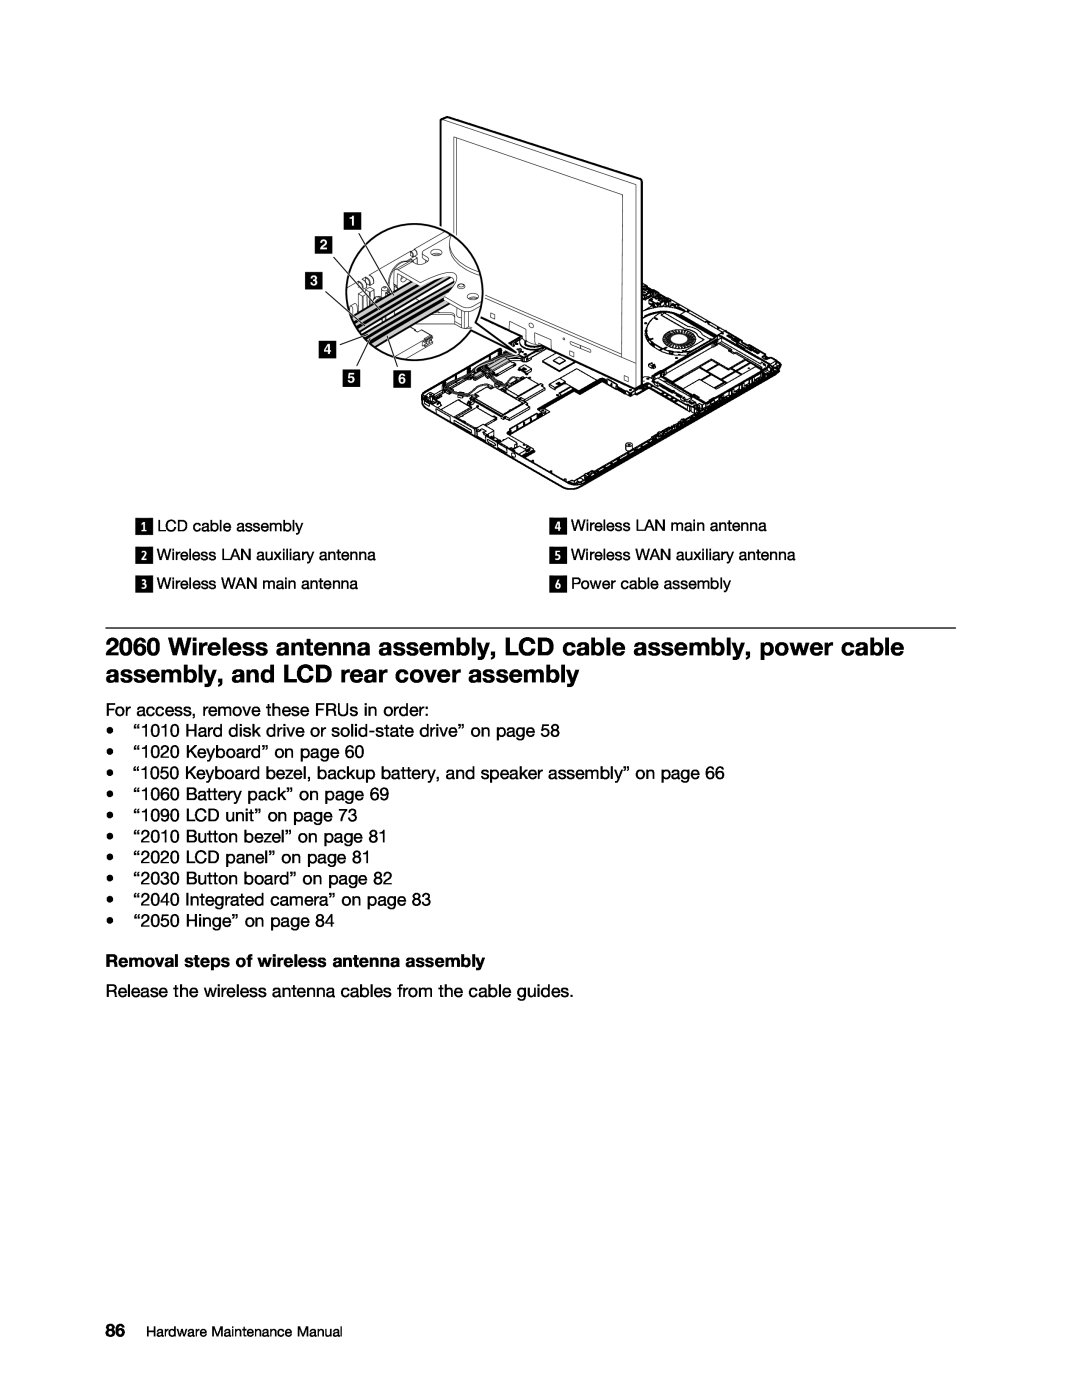 Lenovo S230U, 33472YU manual Removal steps of wireless antenna assembly, Hardware Maintenance Manual 